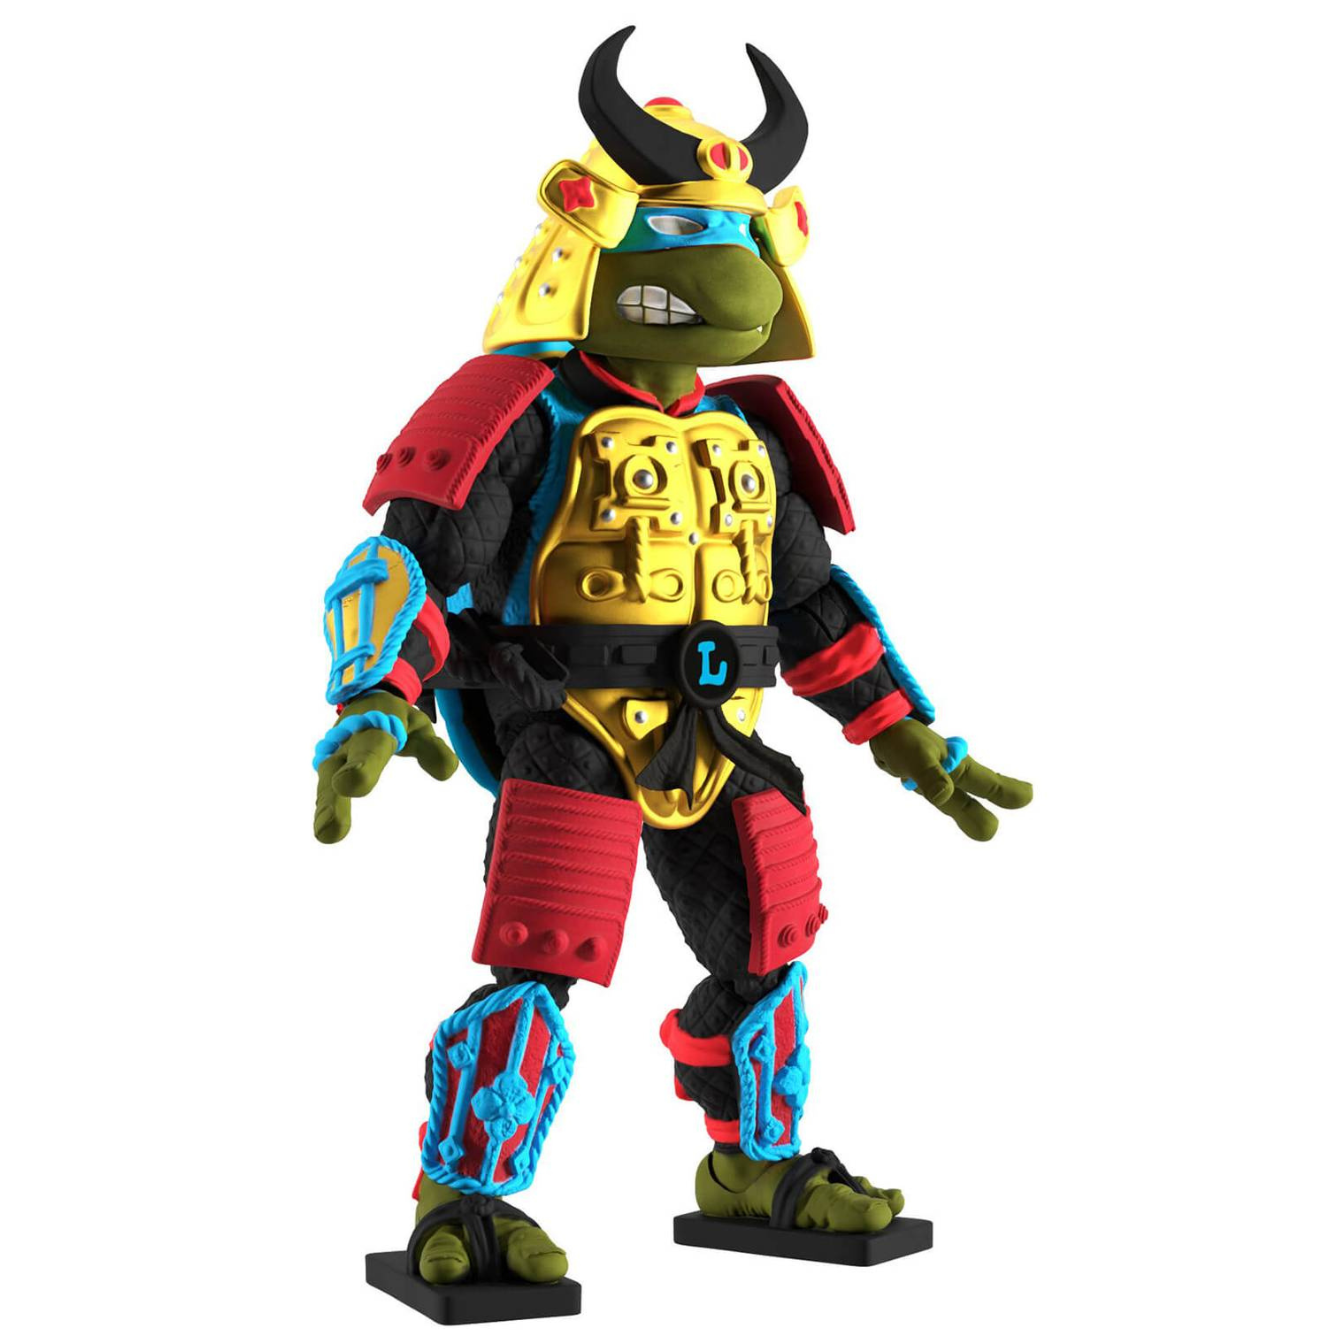 Super7 Ultimate Teenage Mutant Ninja Turtles Wave 5 Leo the Sewer Samurai 7 Inch Action Figure